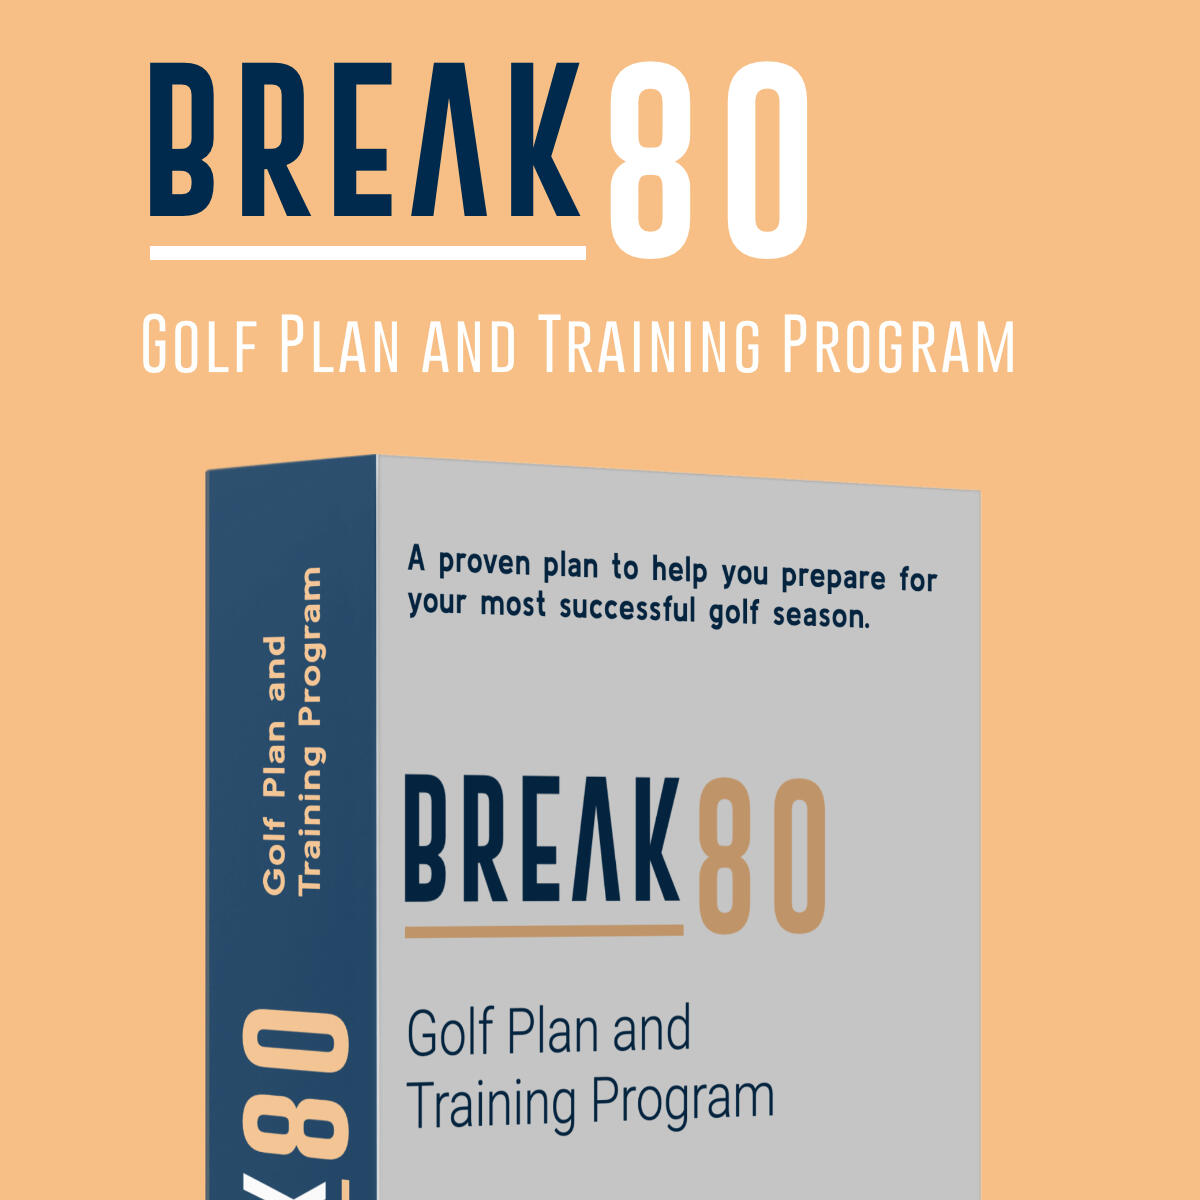 Break 80 Golf Plan and Training Program